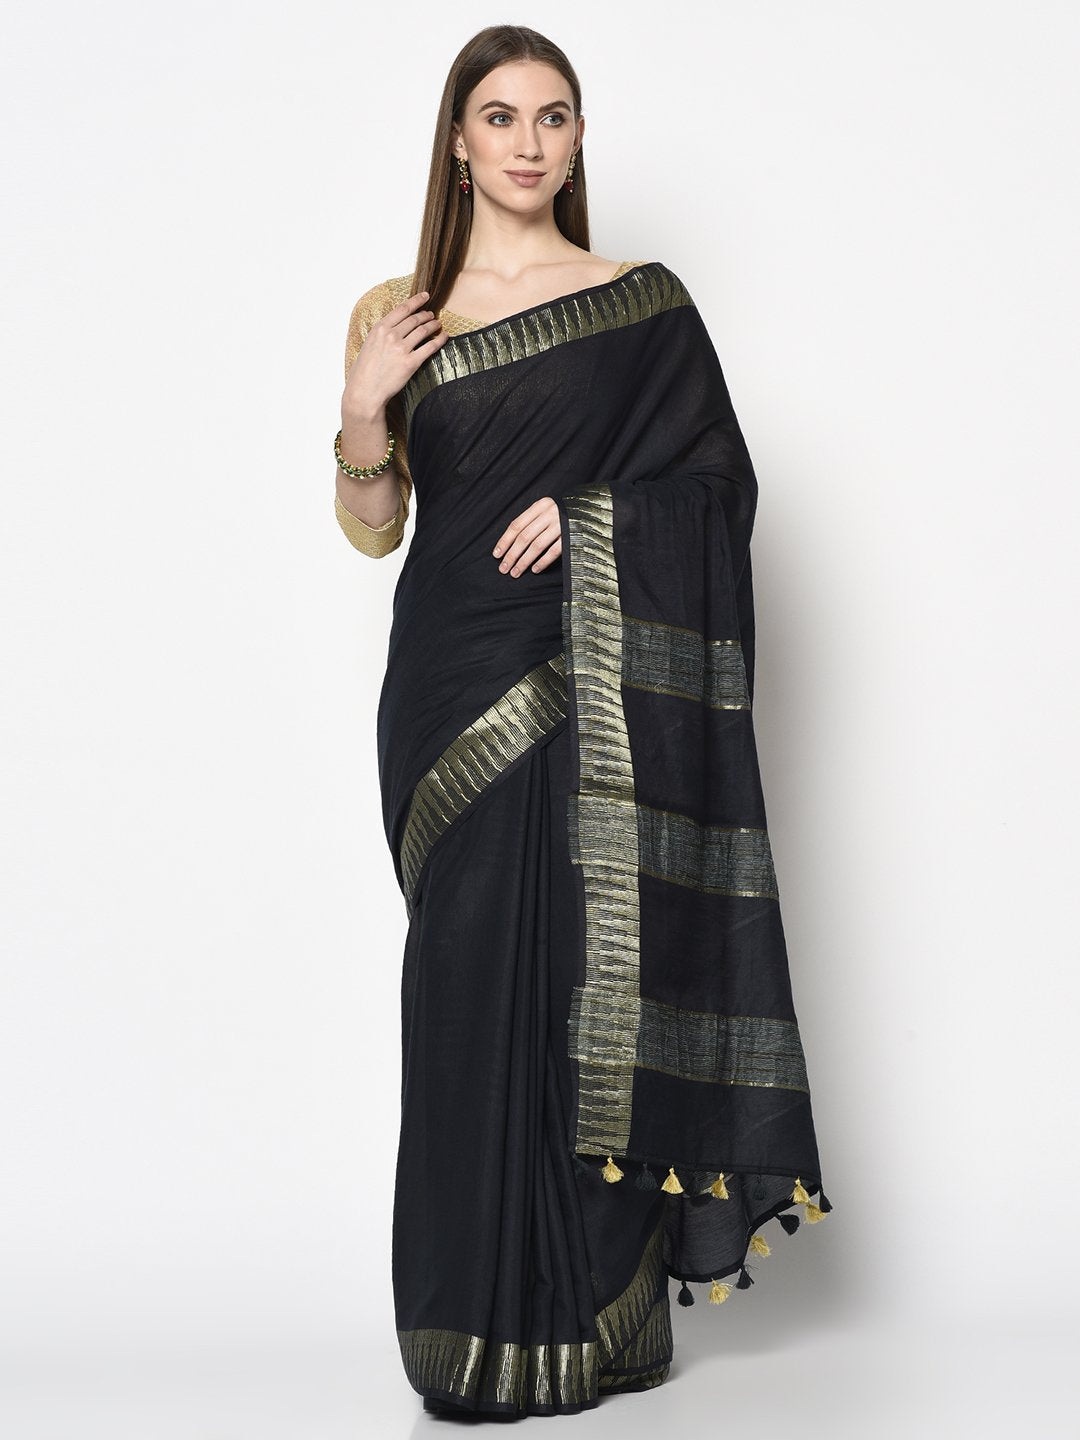 Shop Handloom Saree In Black Colour which is Saree online at simaaya At